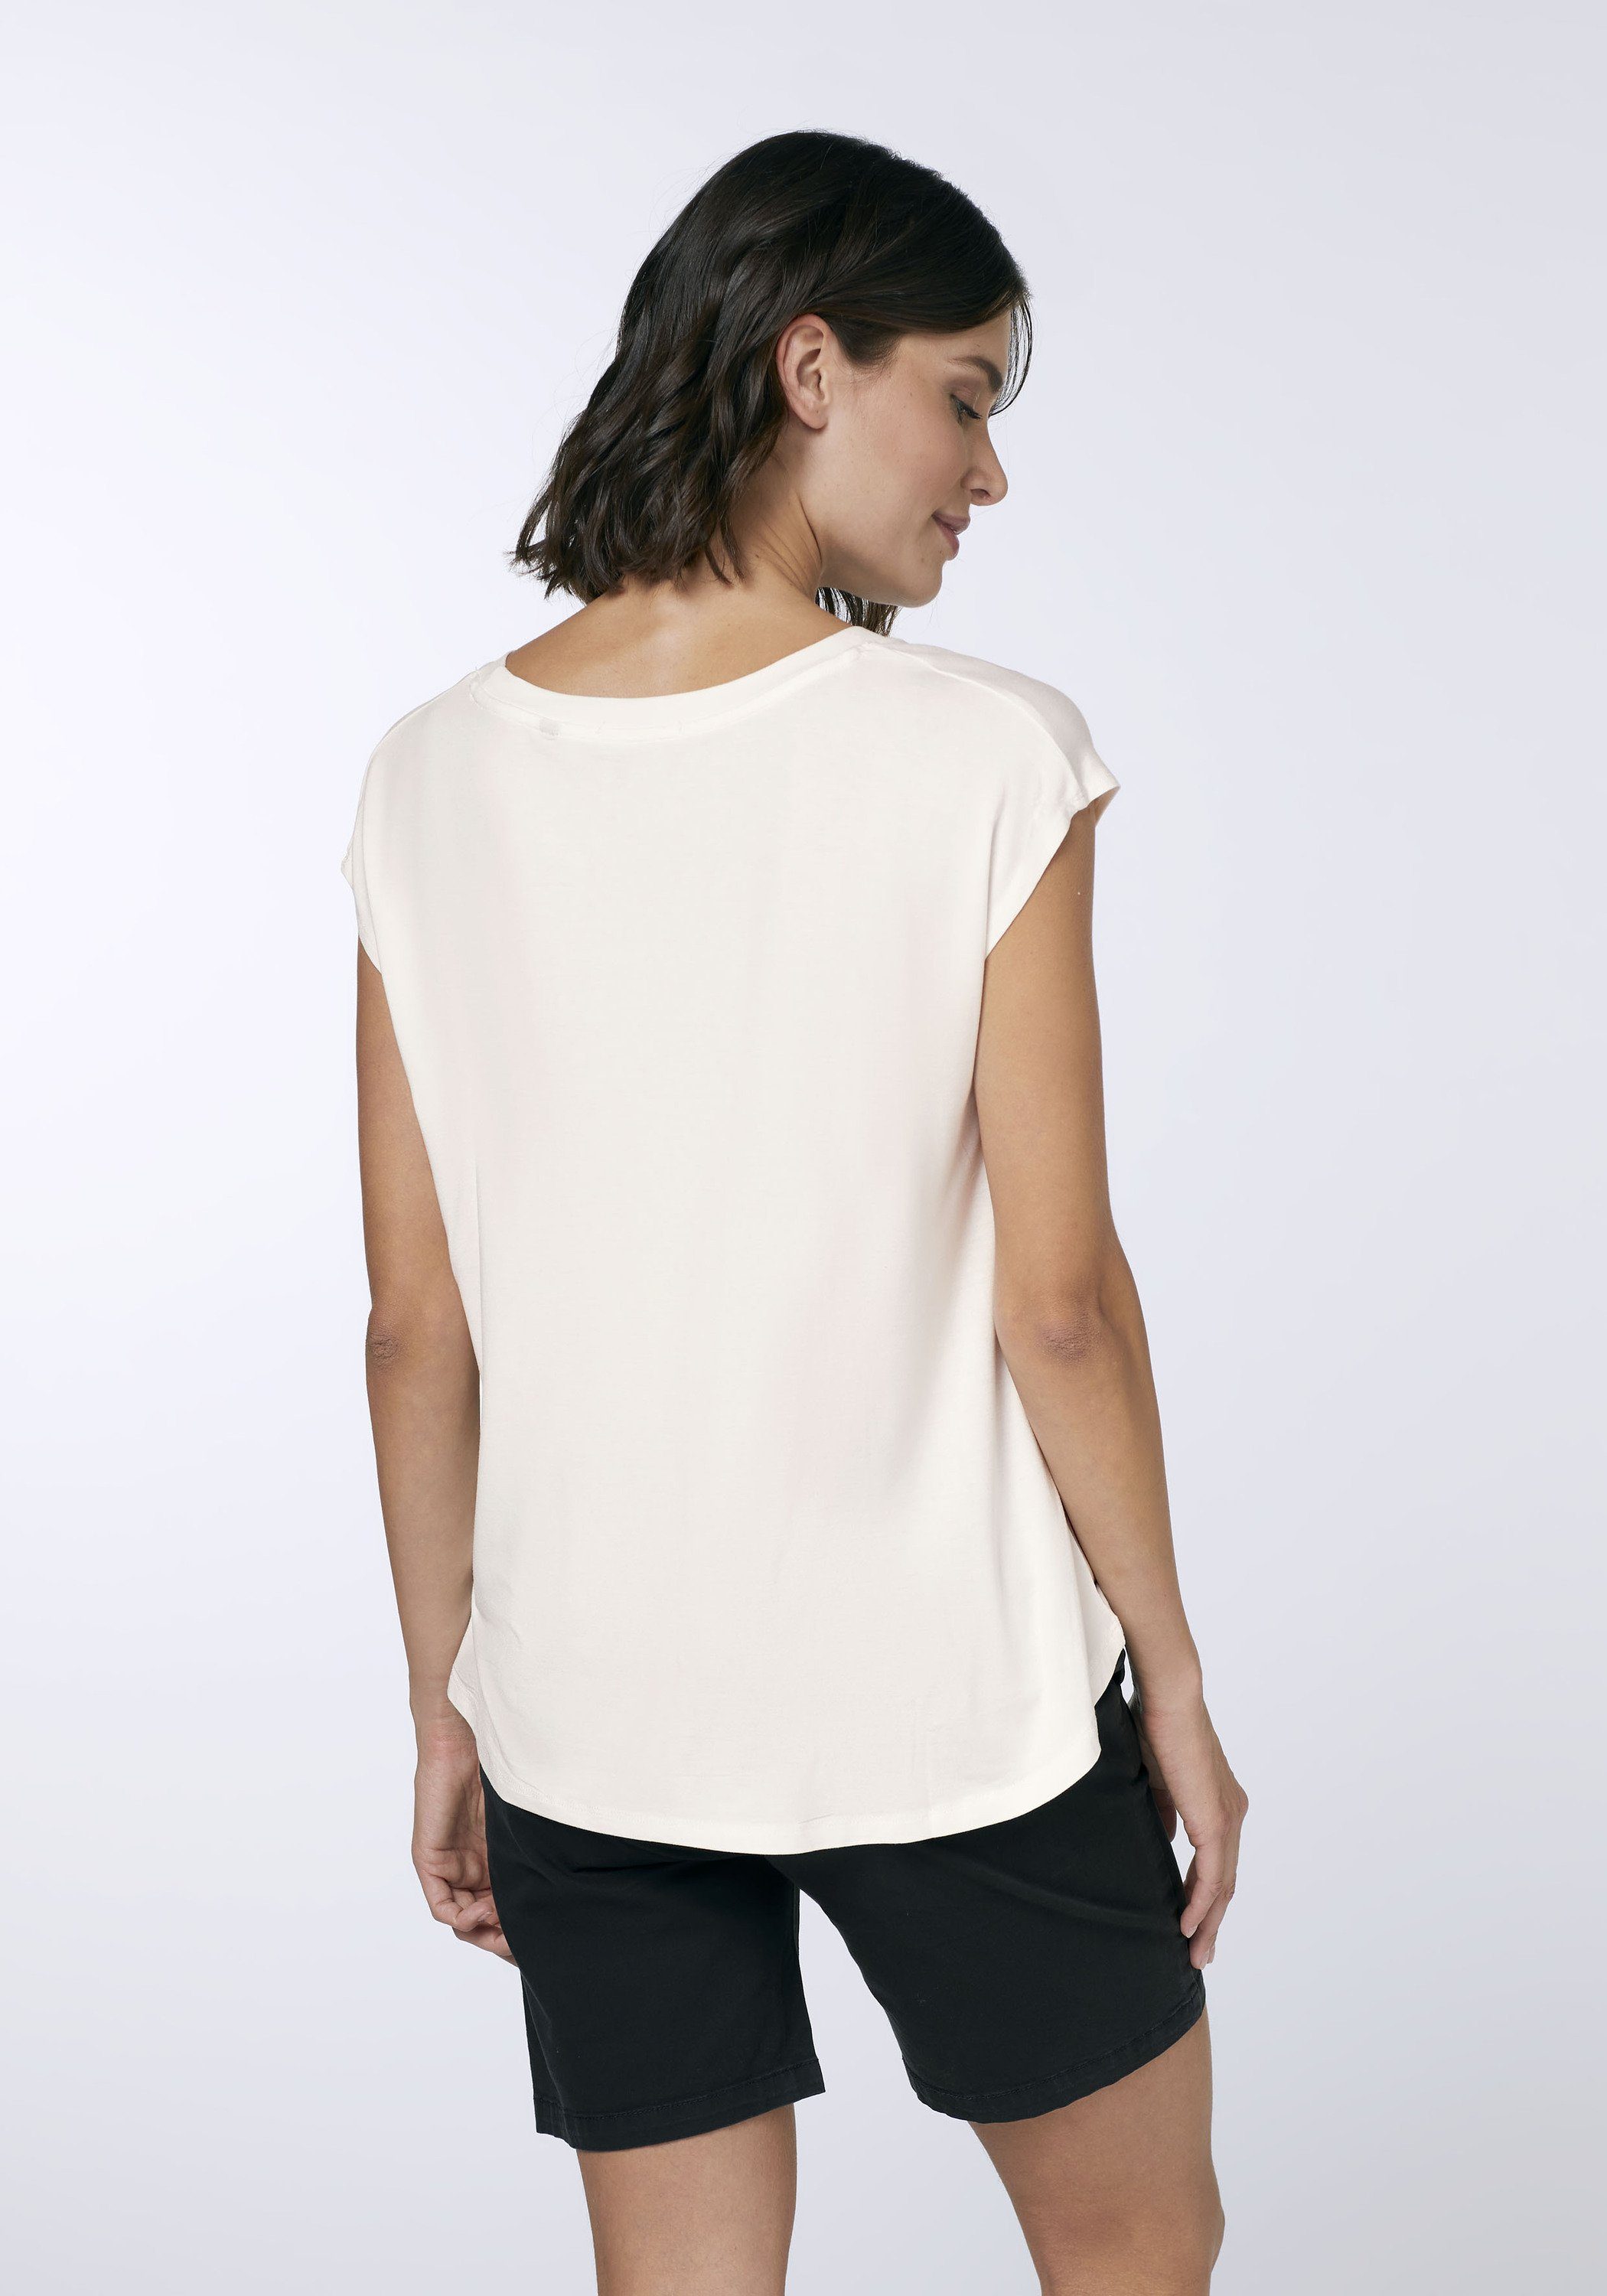 mit White aus Labelprint Chiemsee 1 Print-Shirt Star T-Shirt Viskose-Elasthanmix